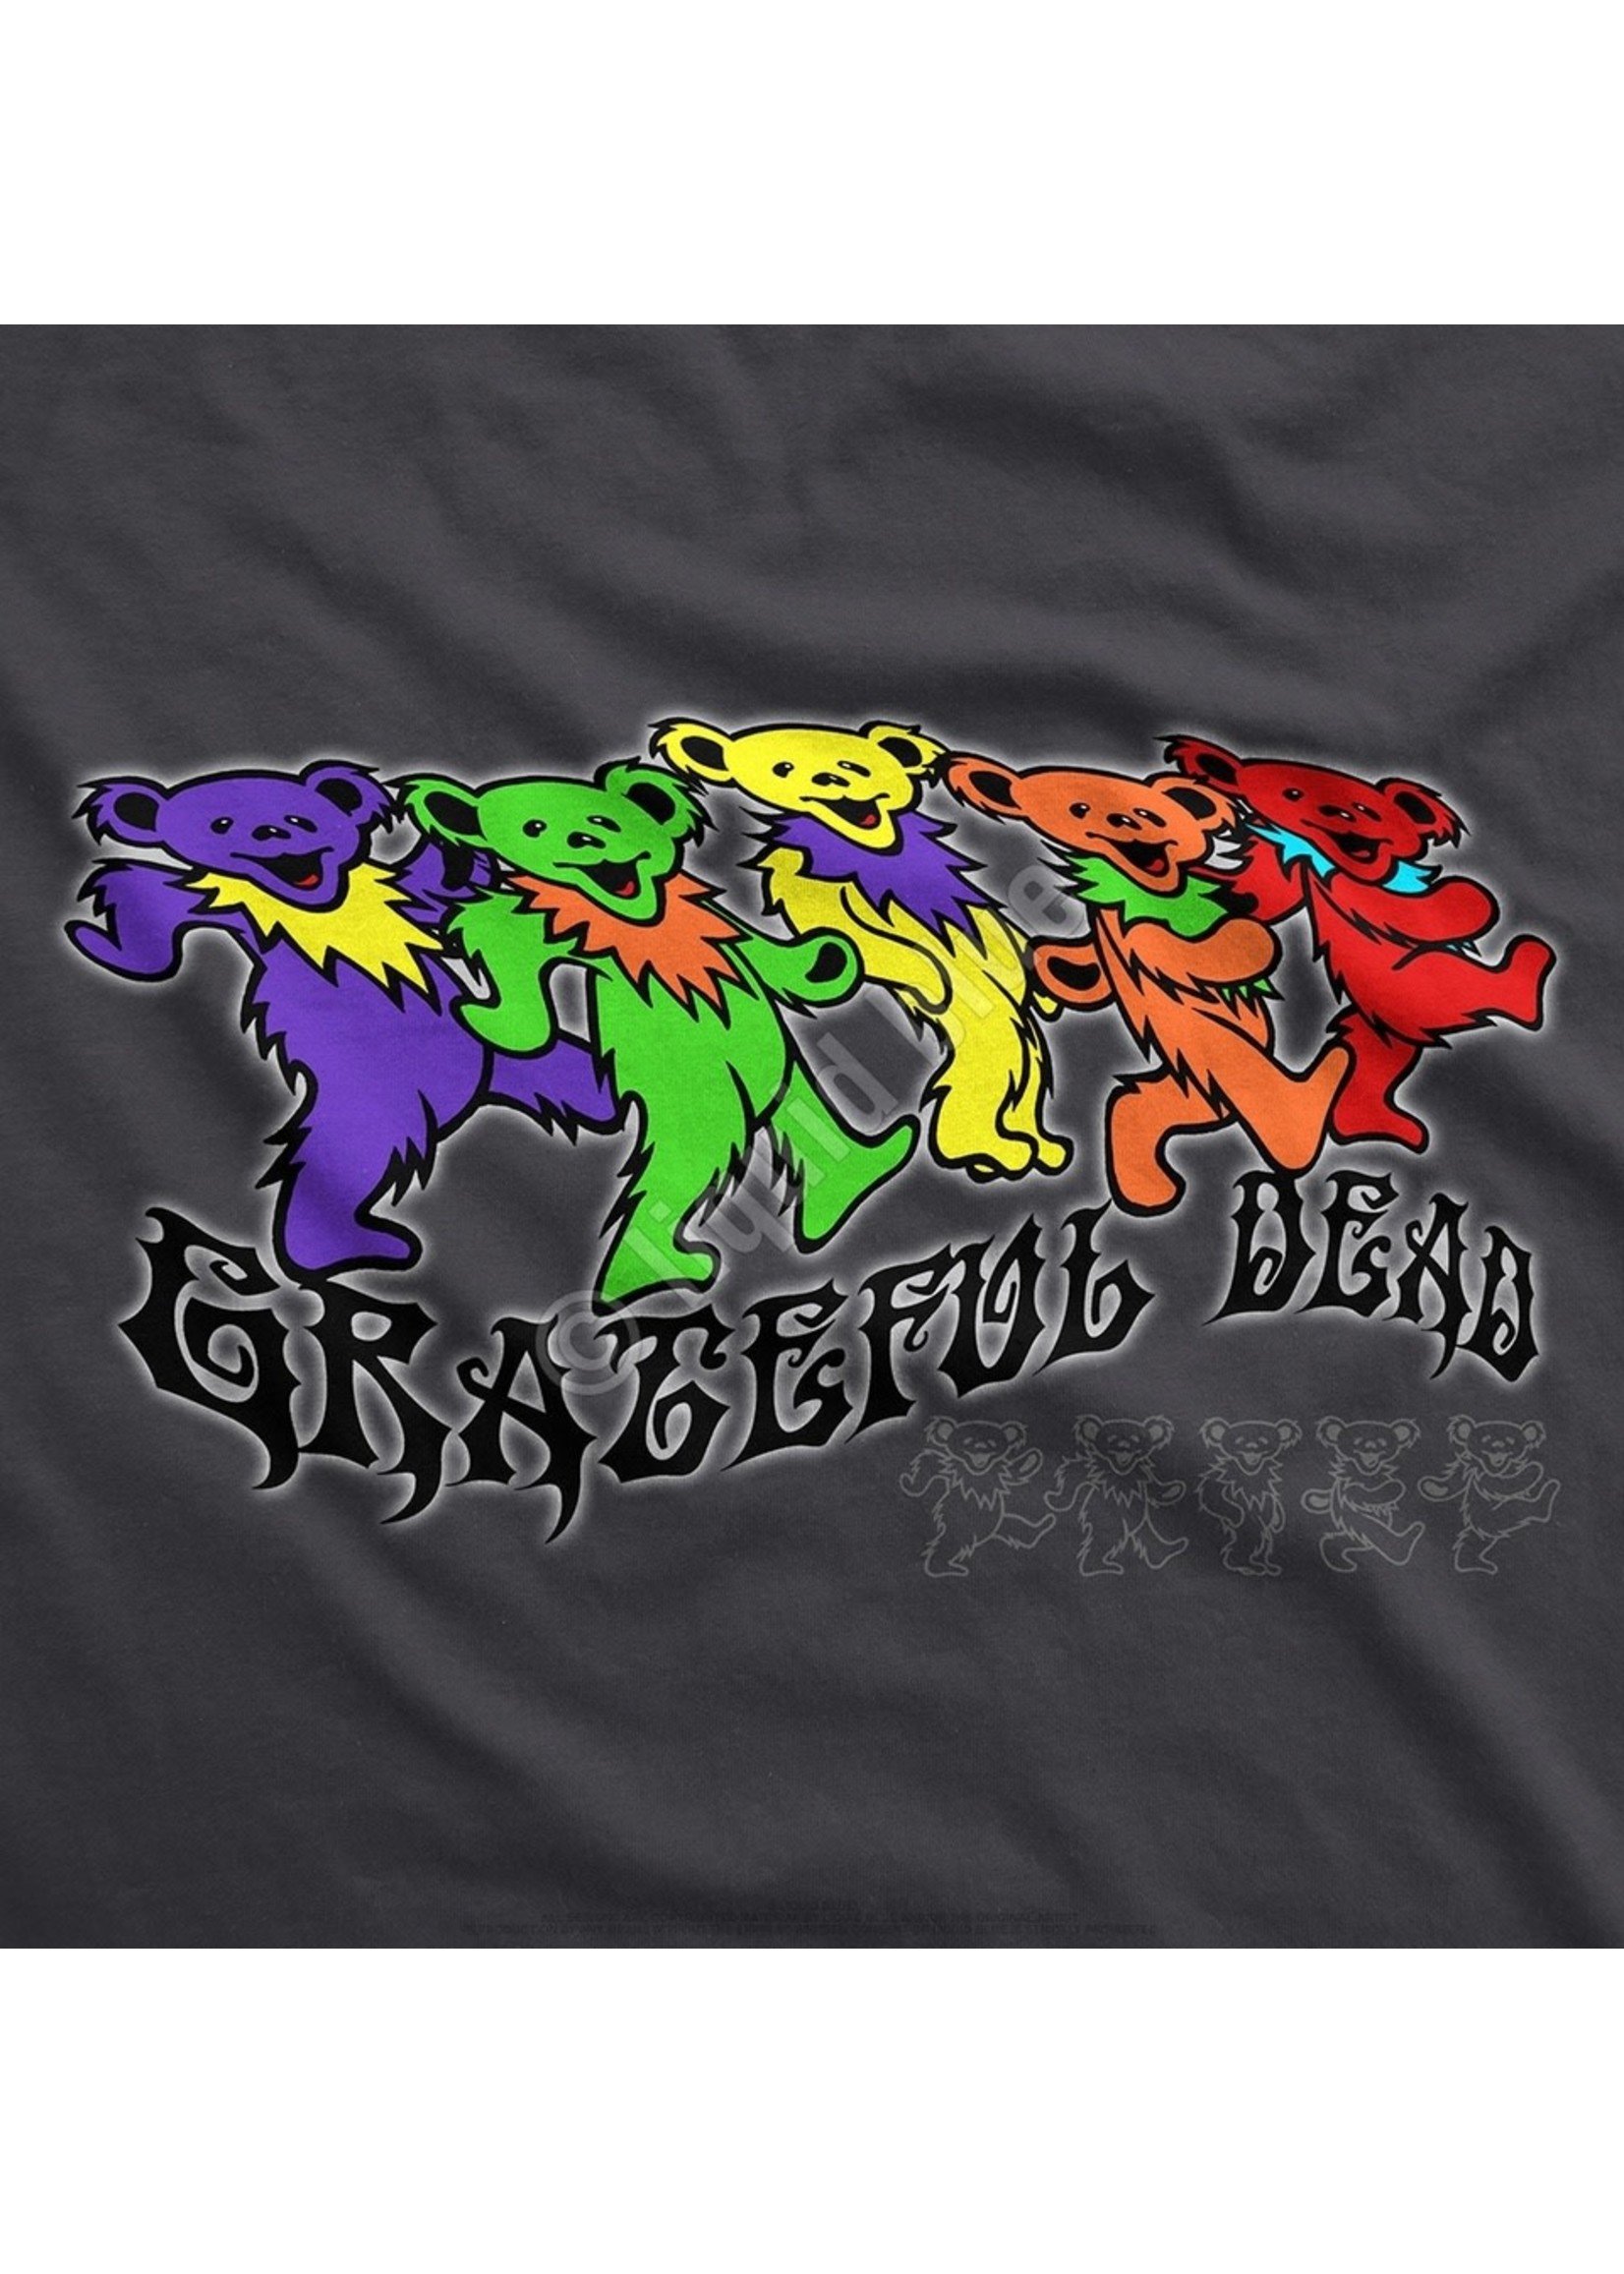 Grateful Dead Trippy Bears - Whatever Shops